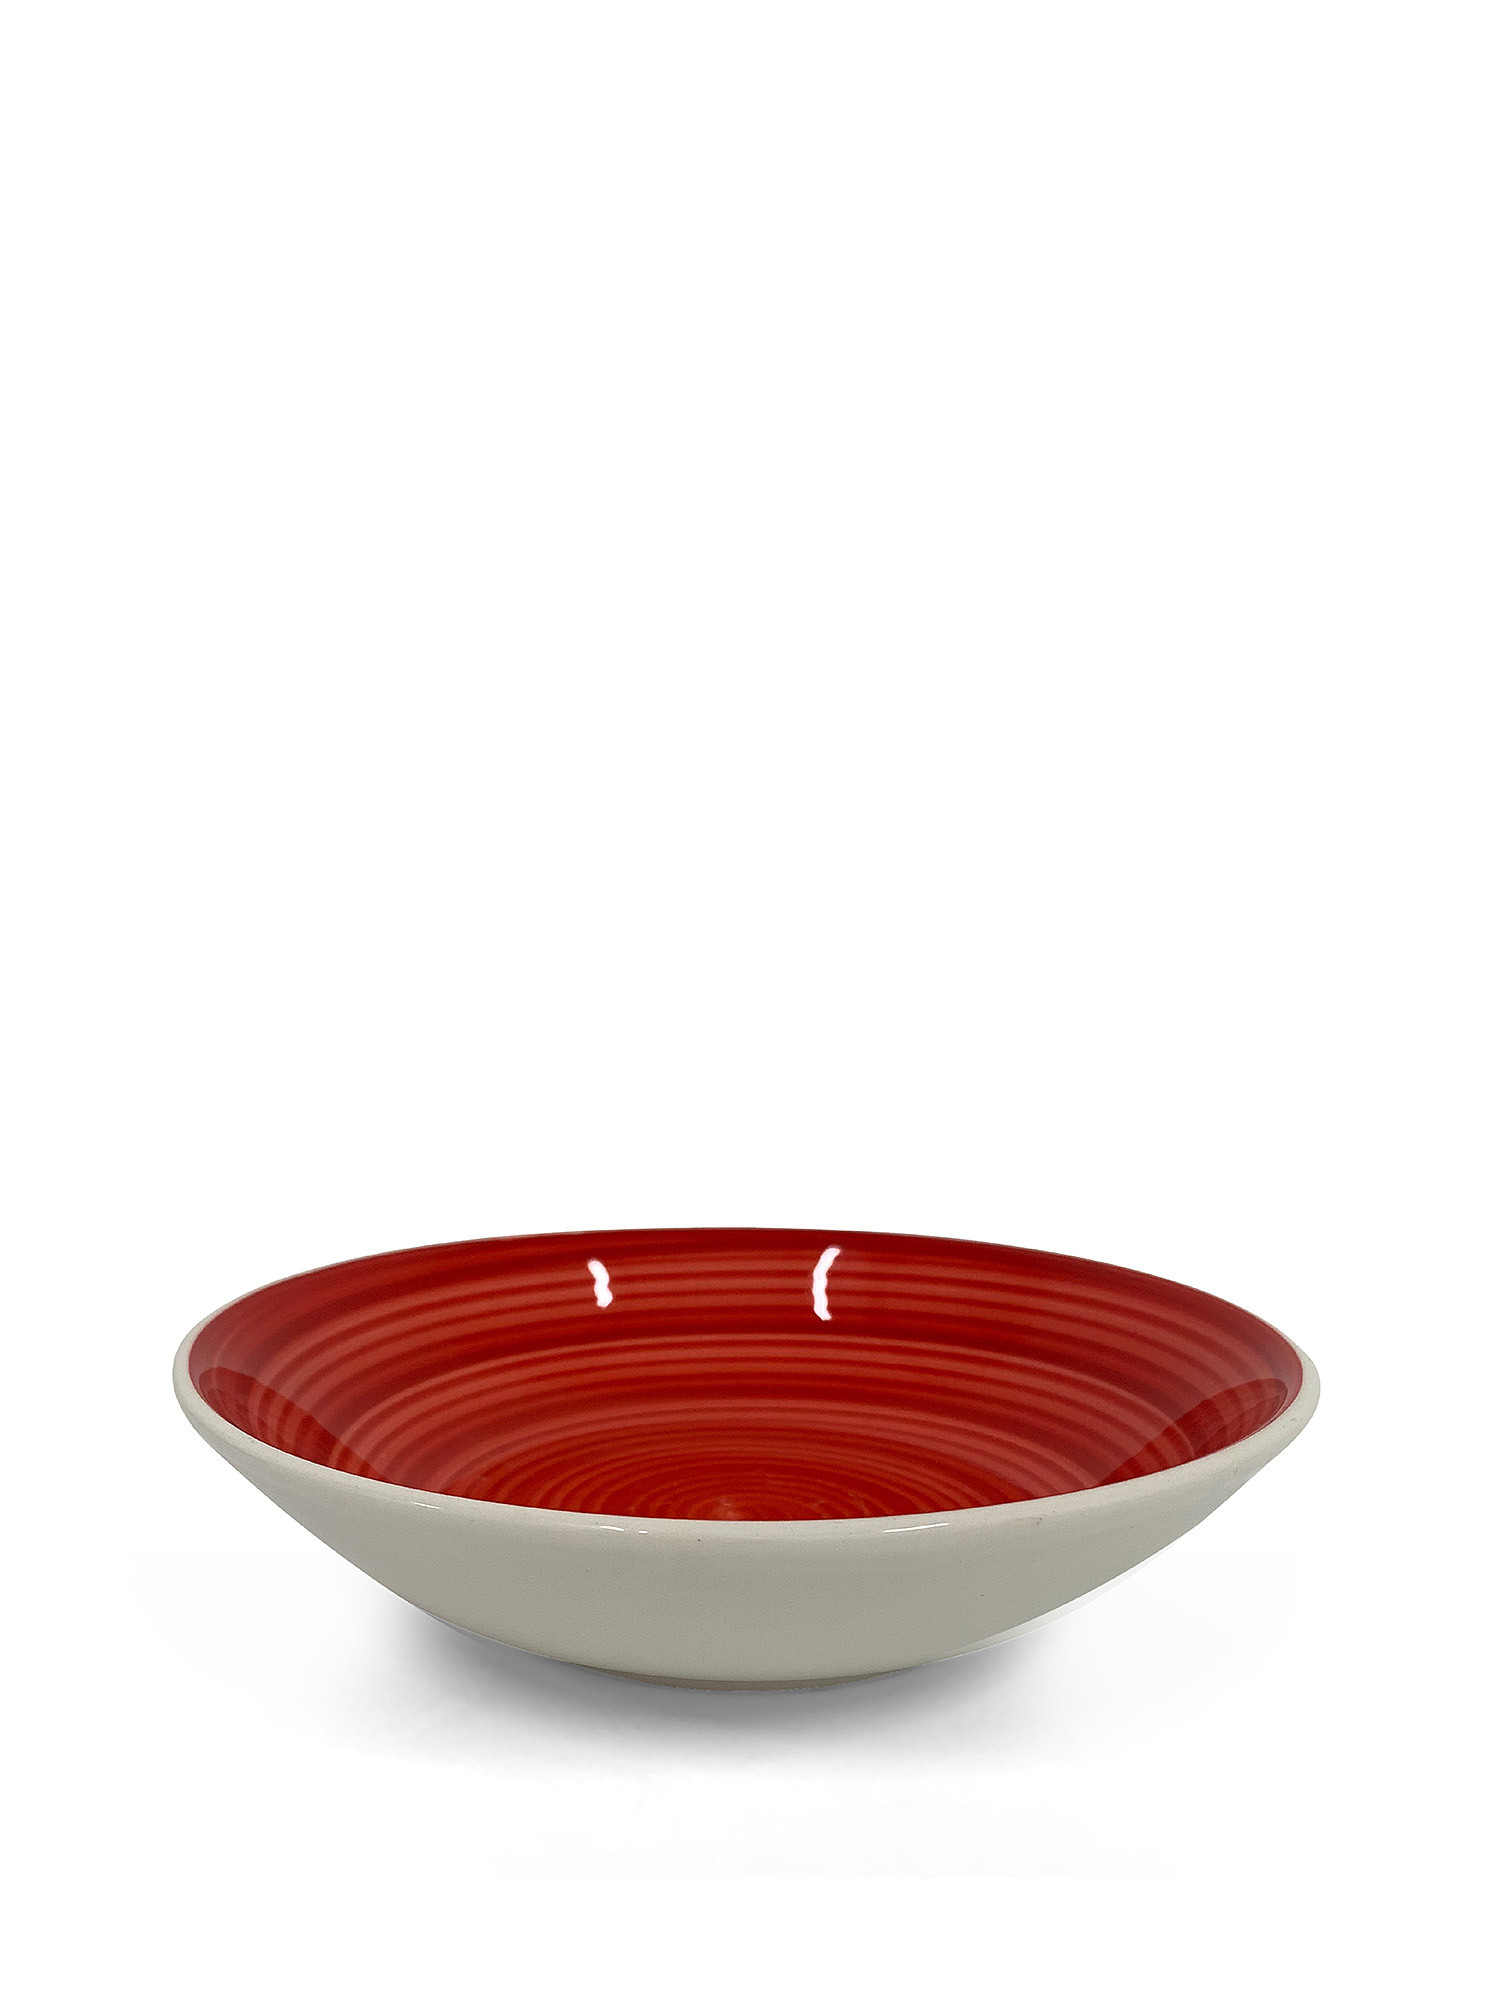 Piatto fondo ceramica dipinta a mano Spirale, Rosso, large image number 0